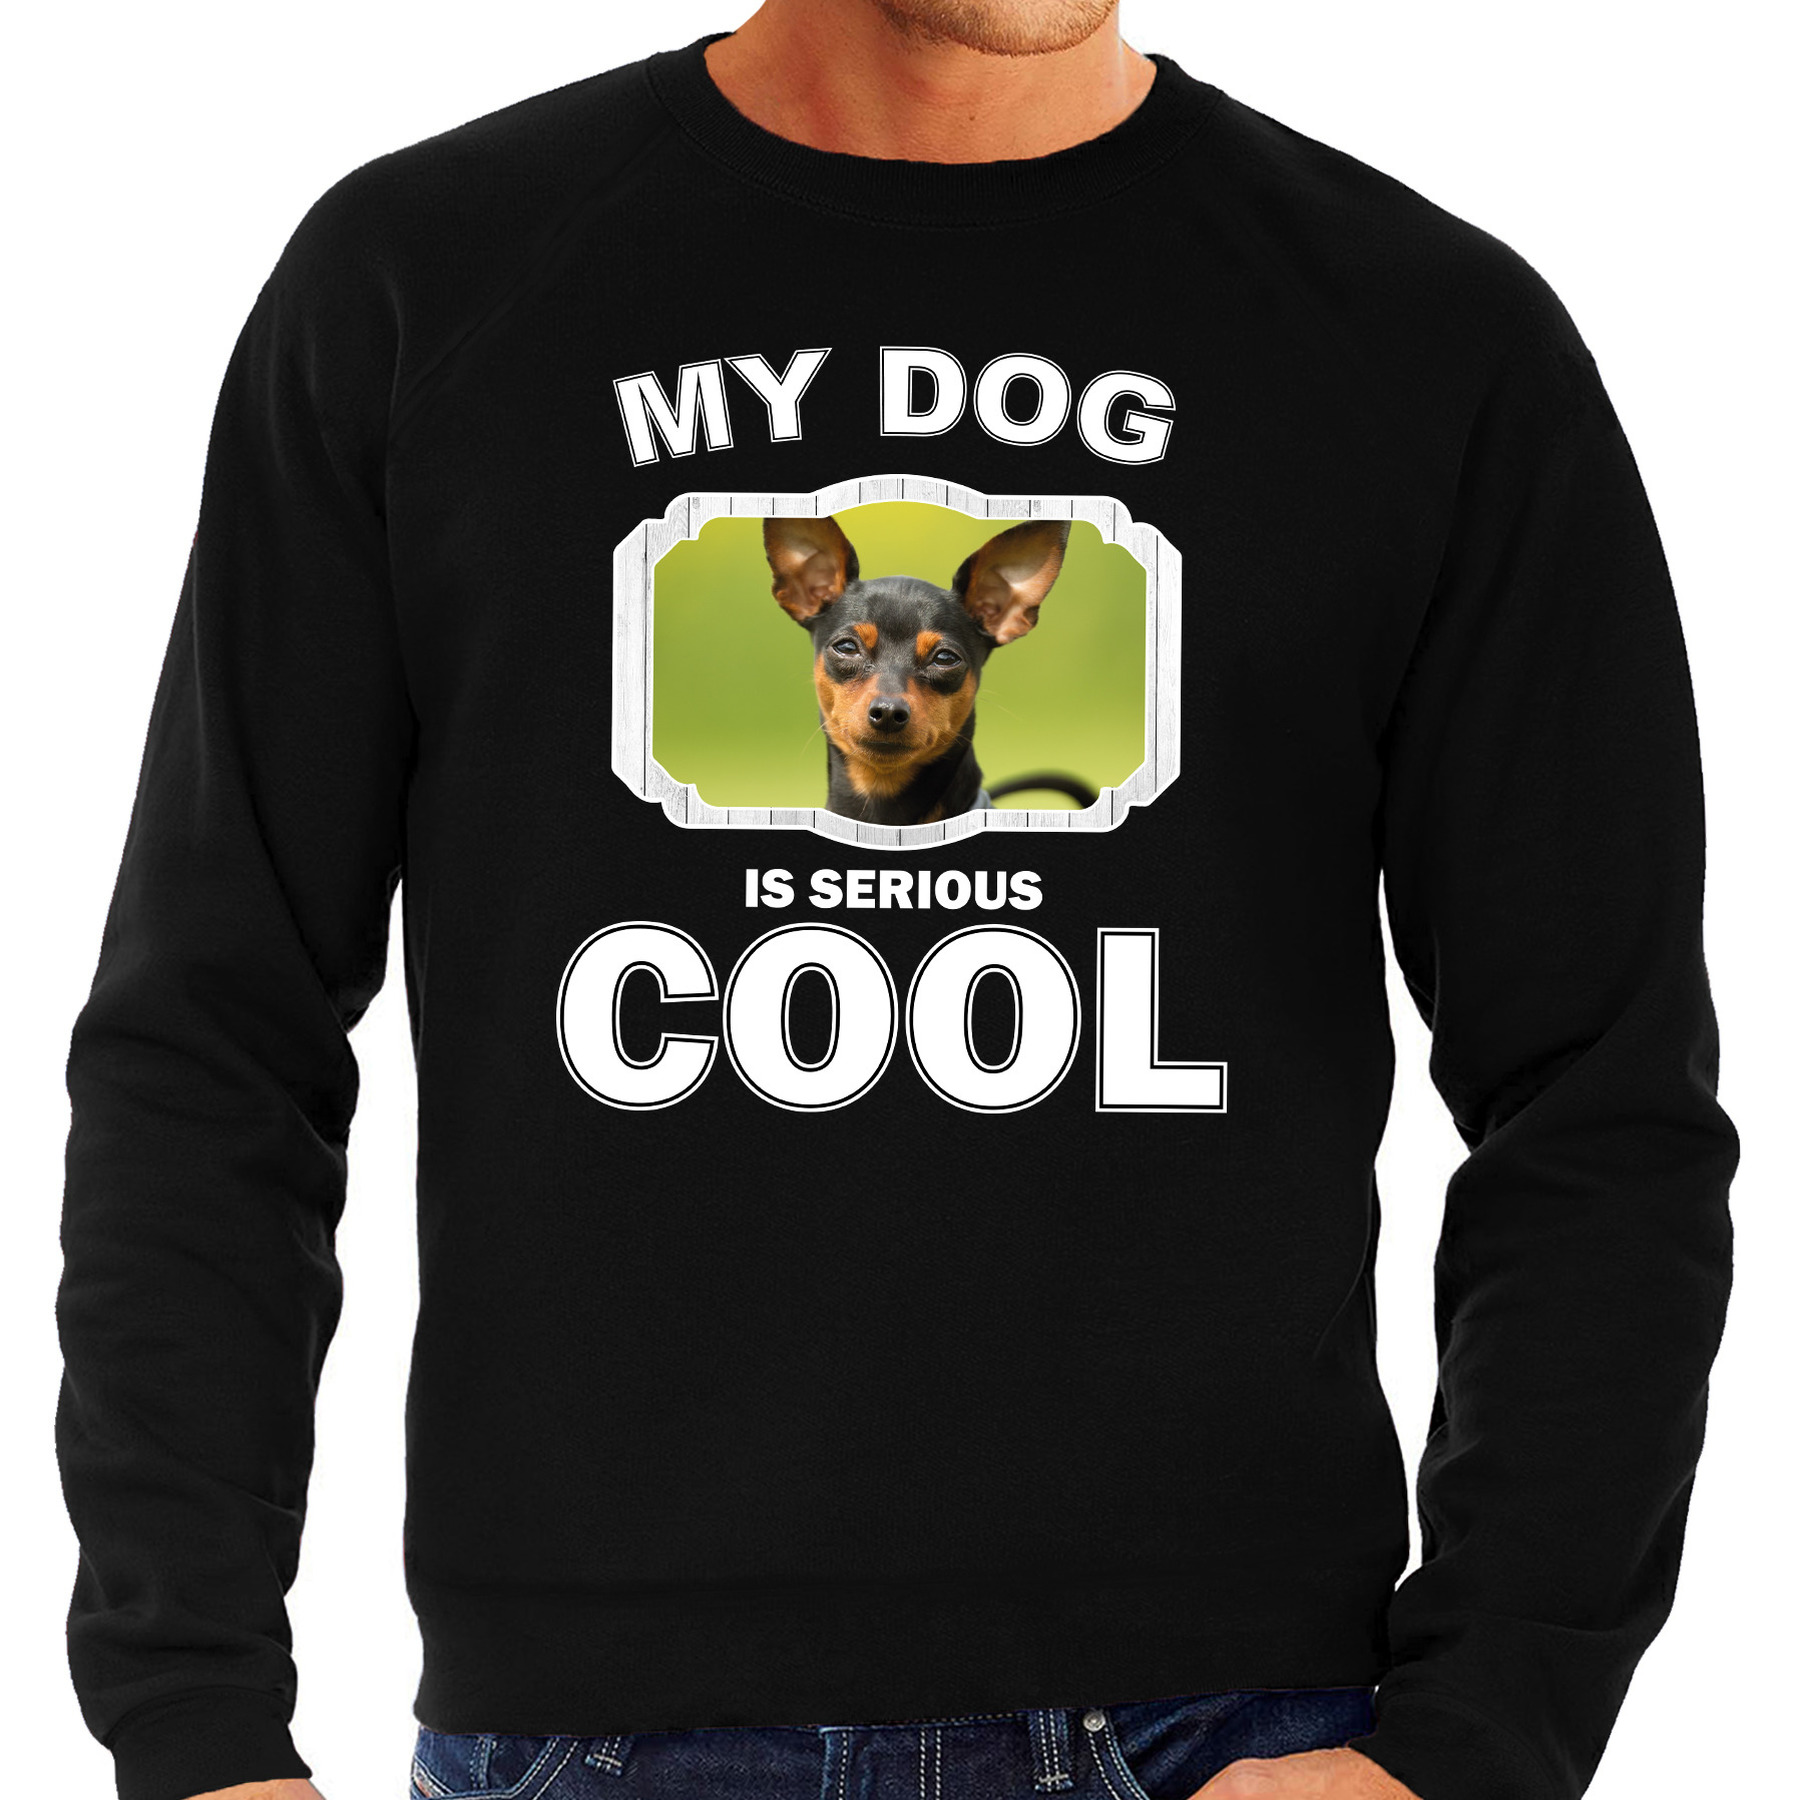 Dwergpinscher honden sweater-trui my dog is serious cool zwart voor heren